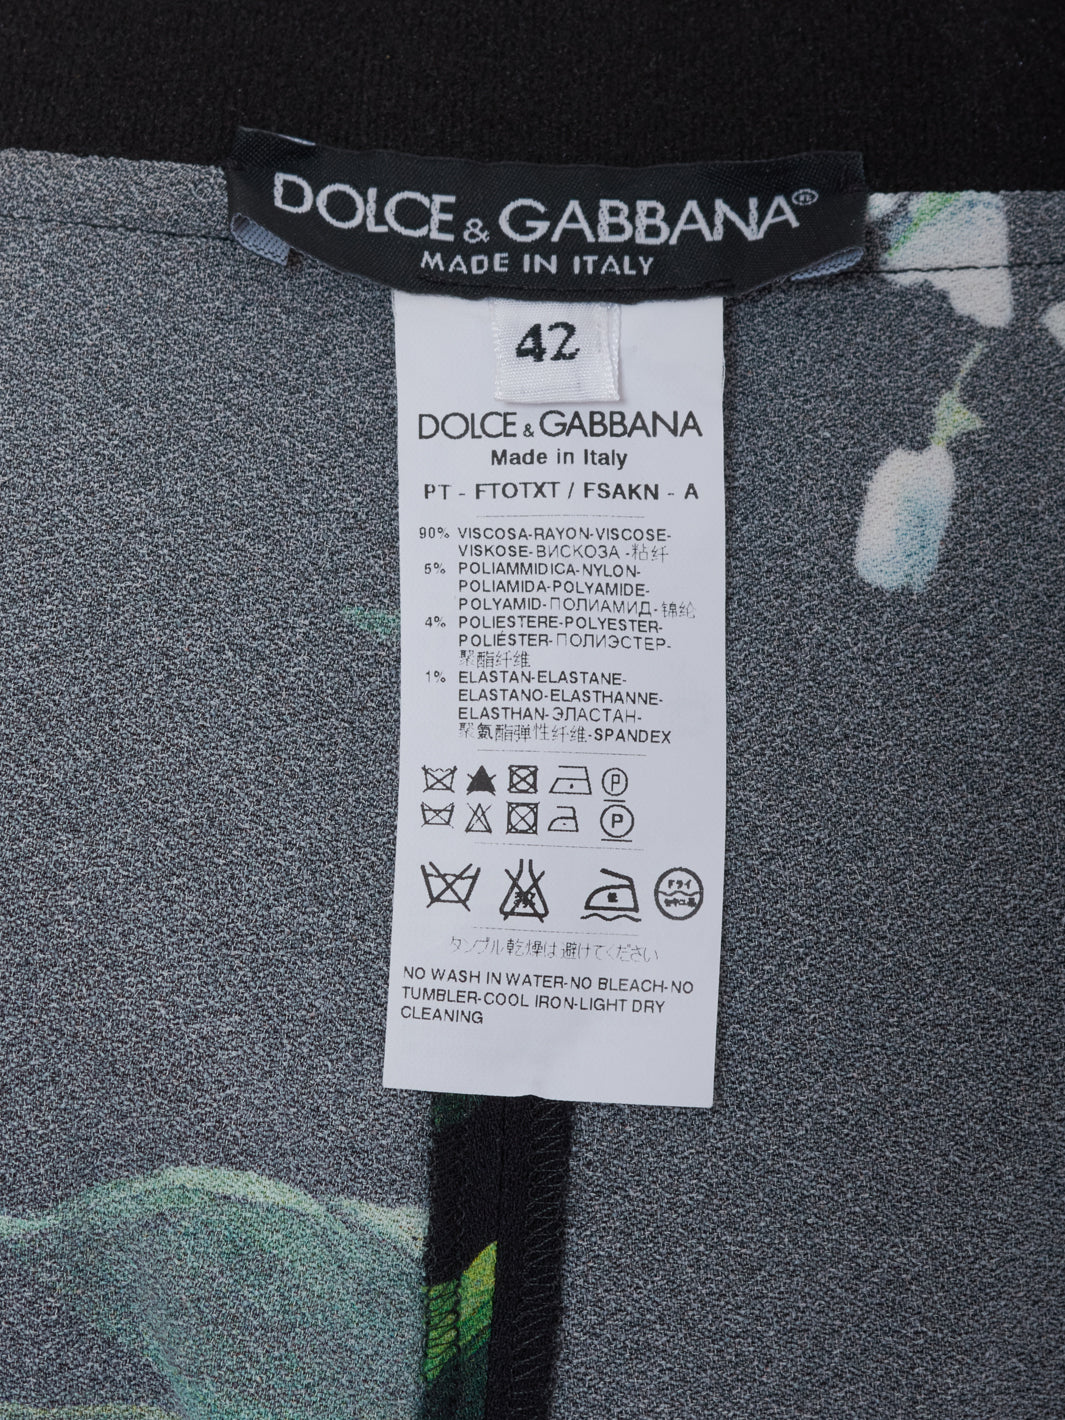 Dolce & Gabbana fancy pants